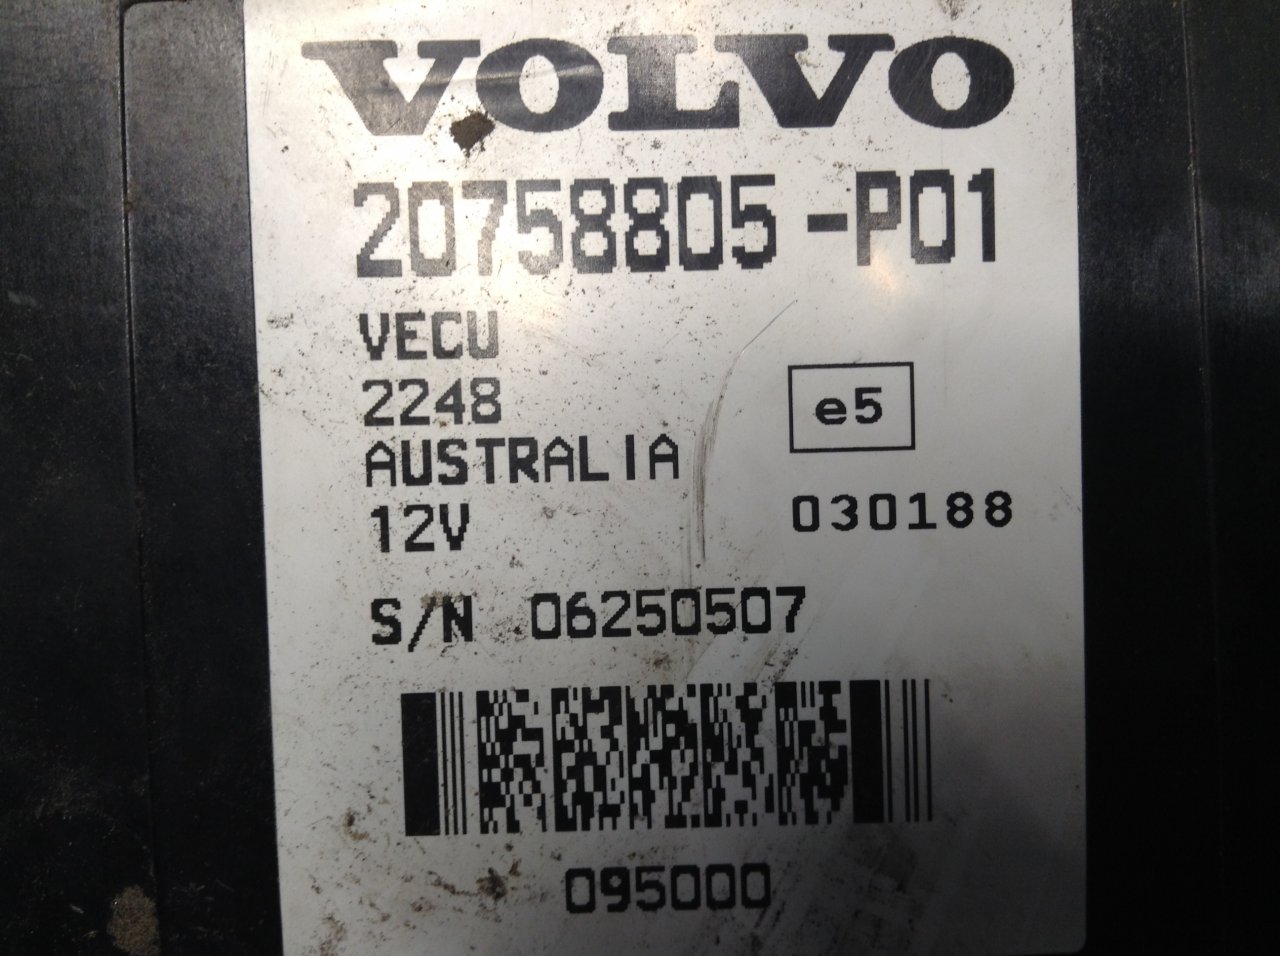 Volvo  Cab Control Module CECU - 20758805-P01